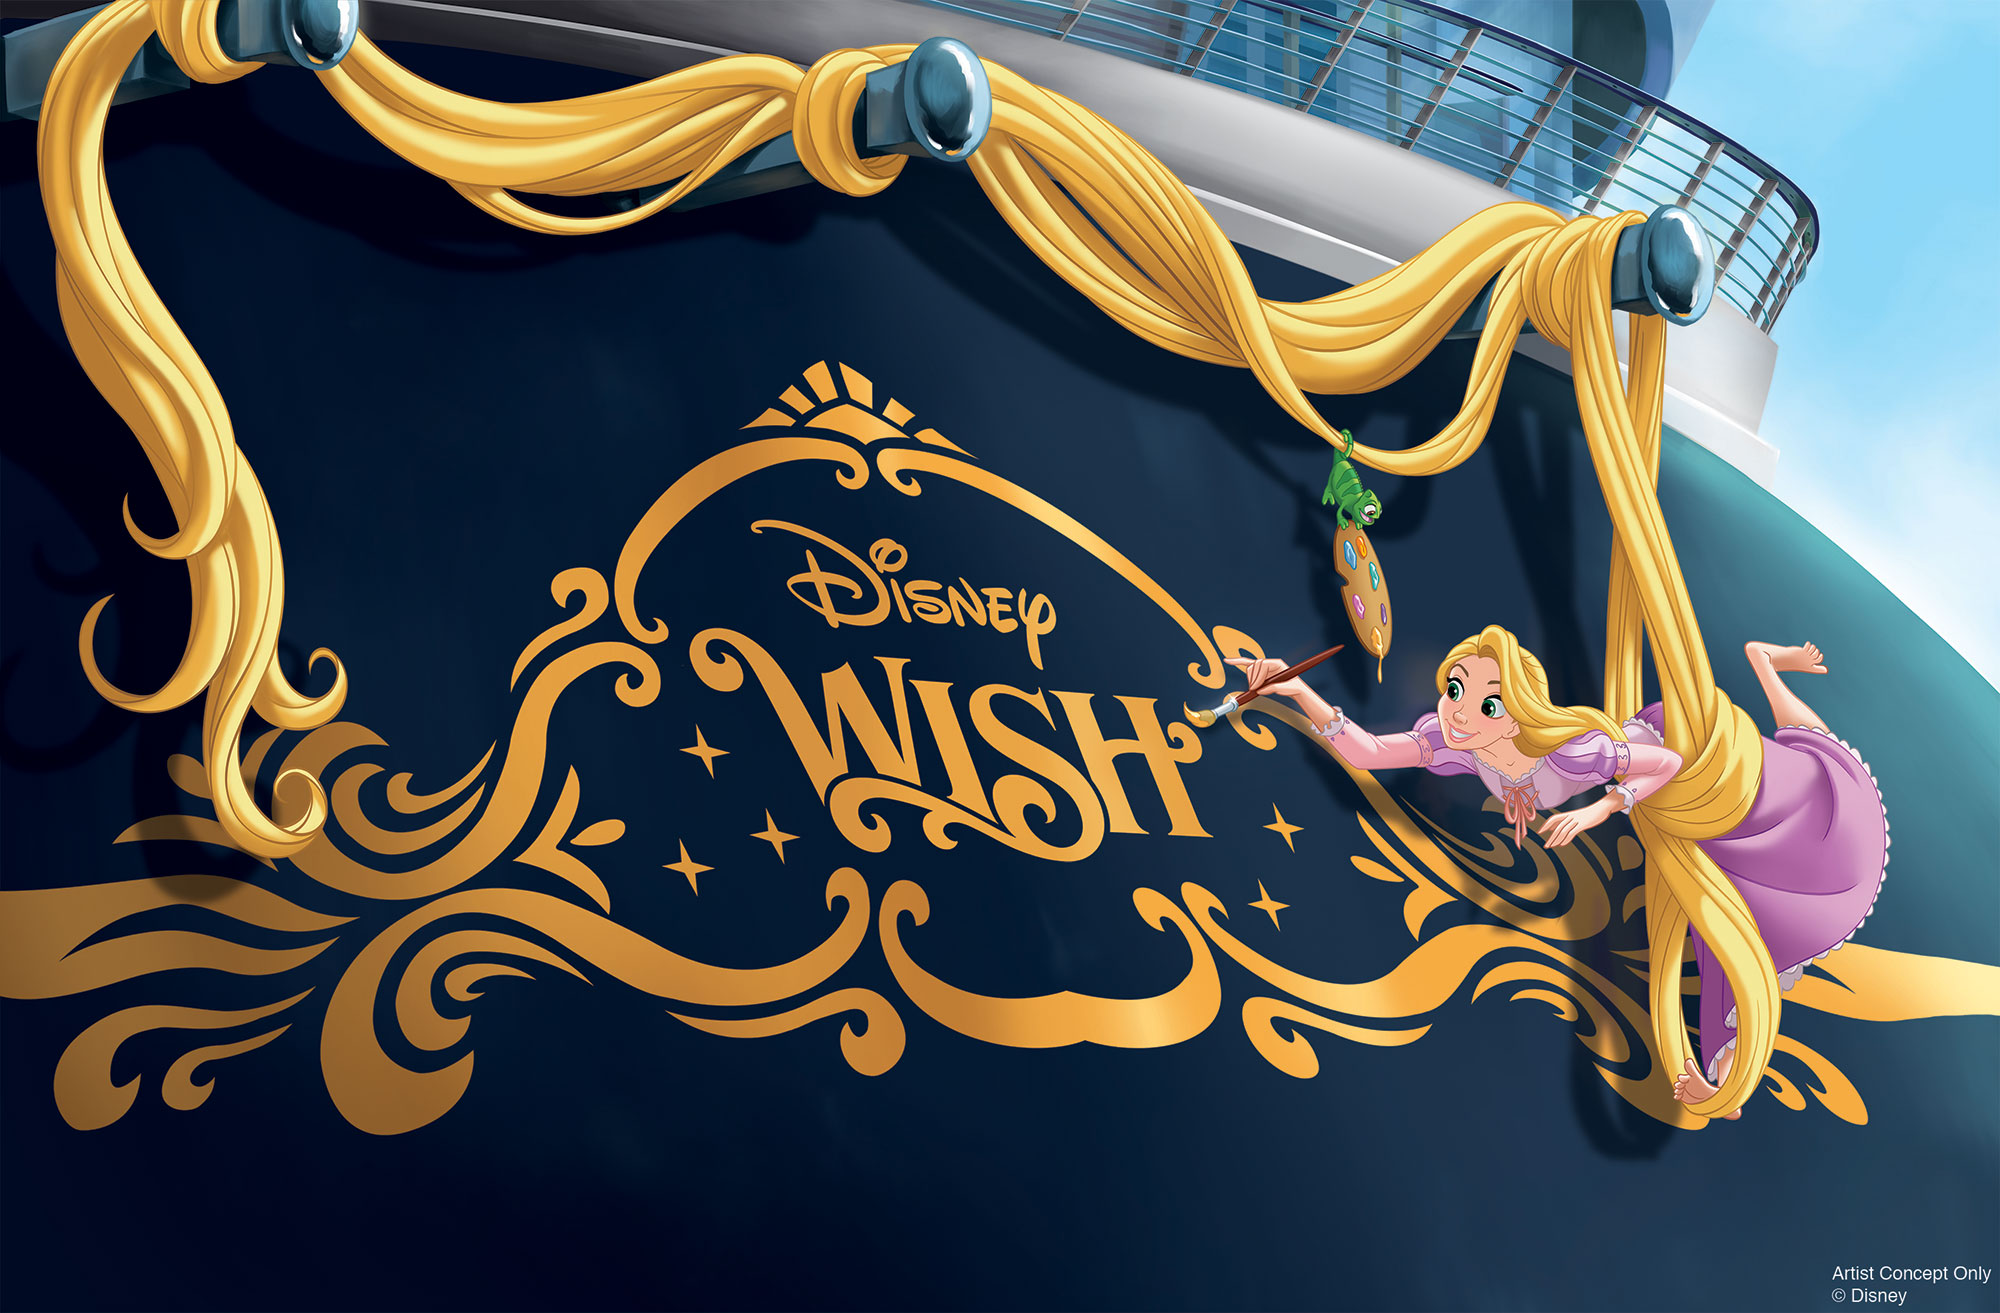 Disney Wish cruise ship concept art. Photo by Disney